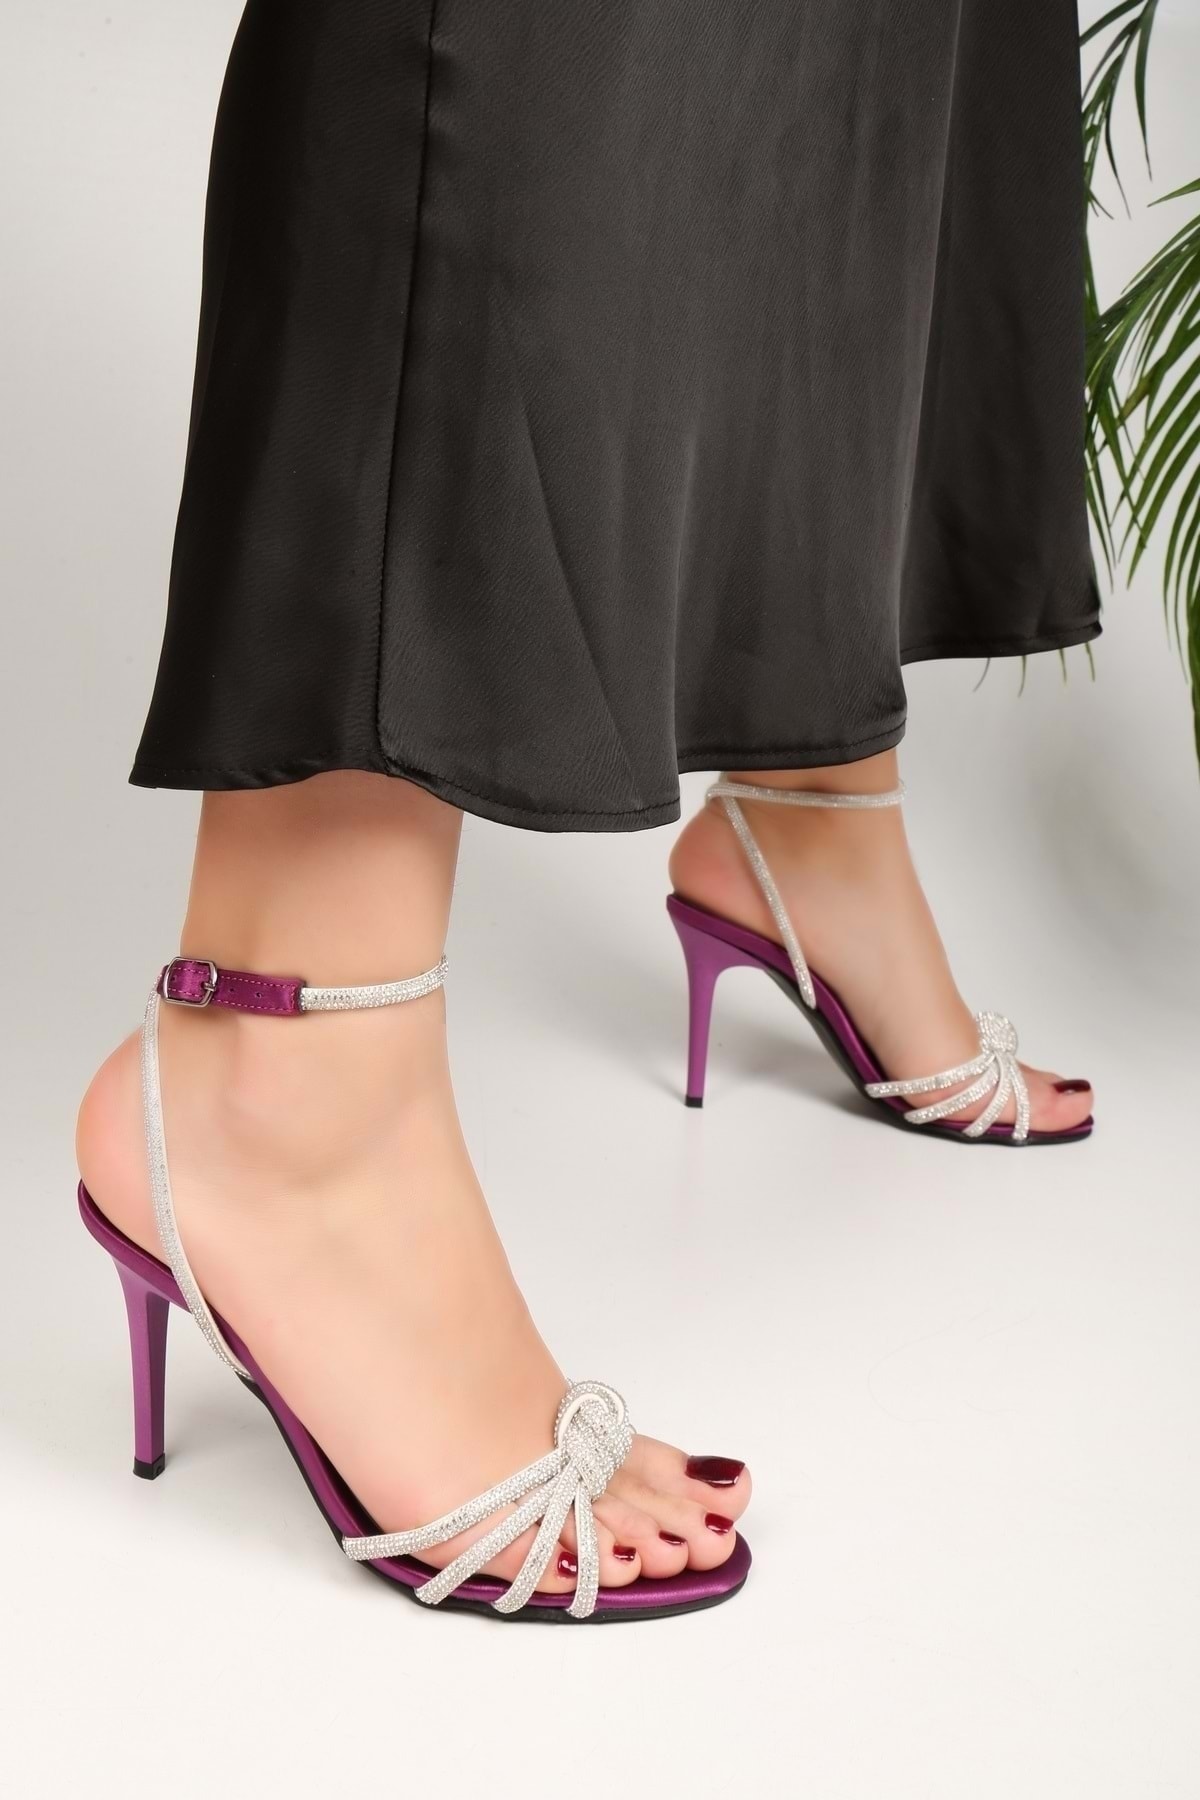 Shoeberry Women's Yord Purple Satin Stone Heeled Shoes